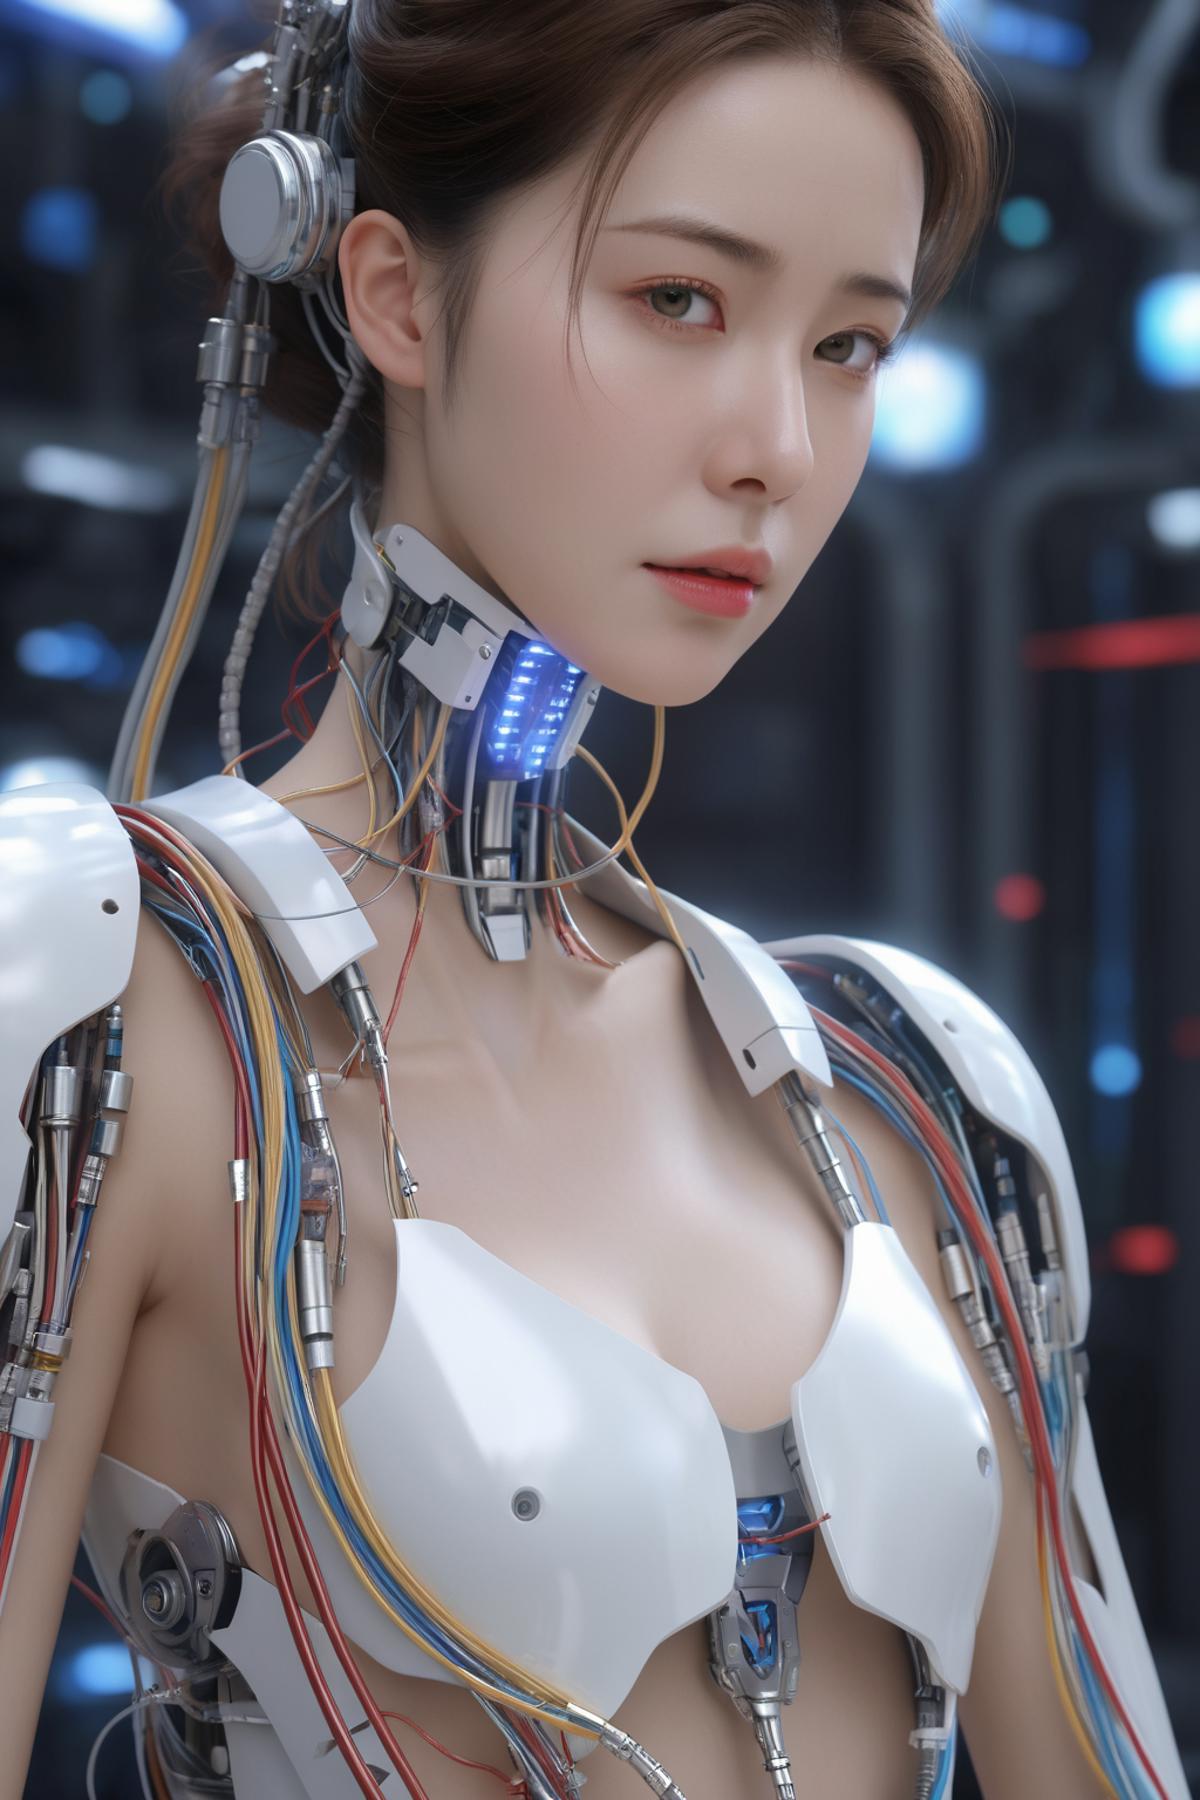 AI model image by wangweinn636